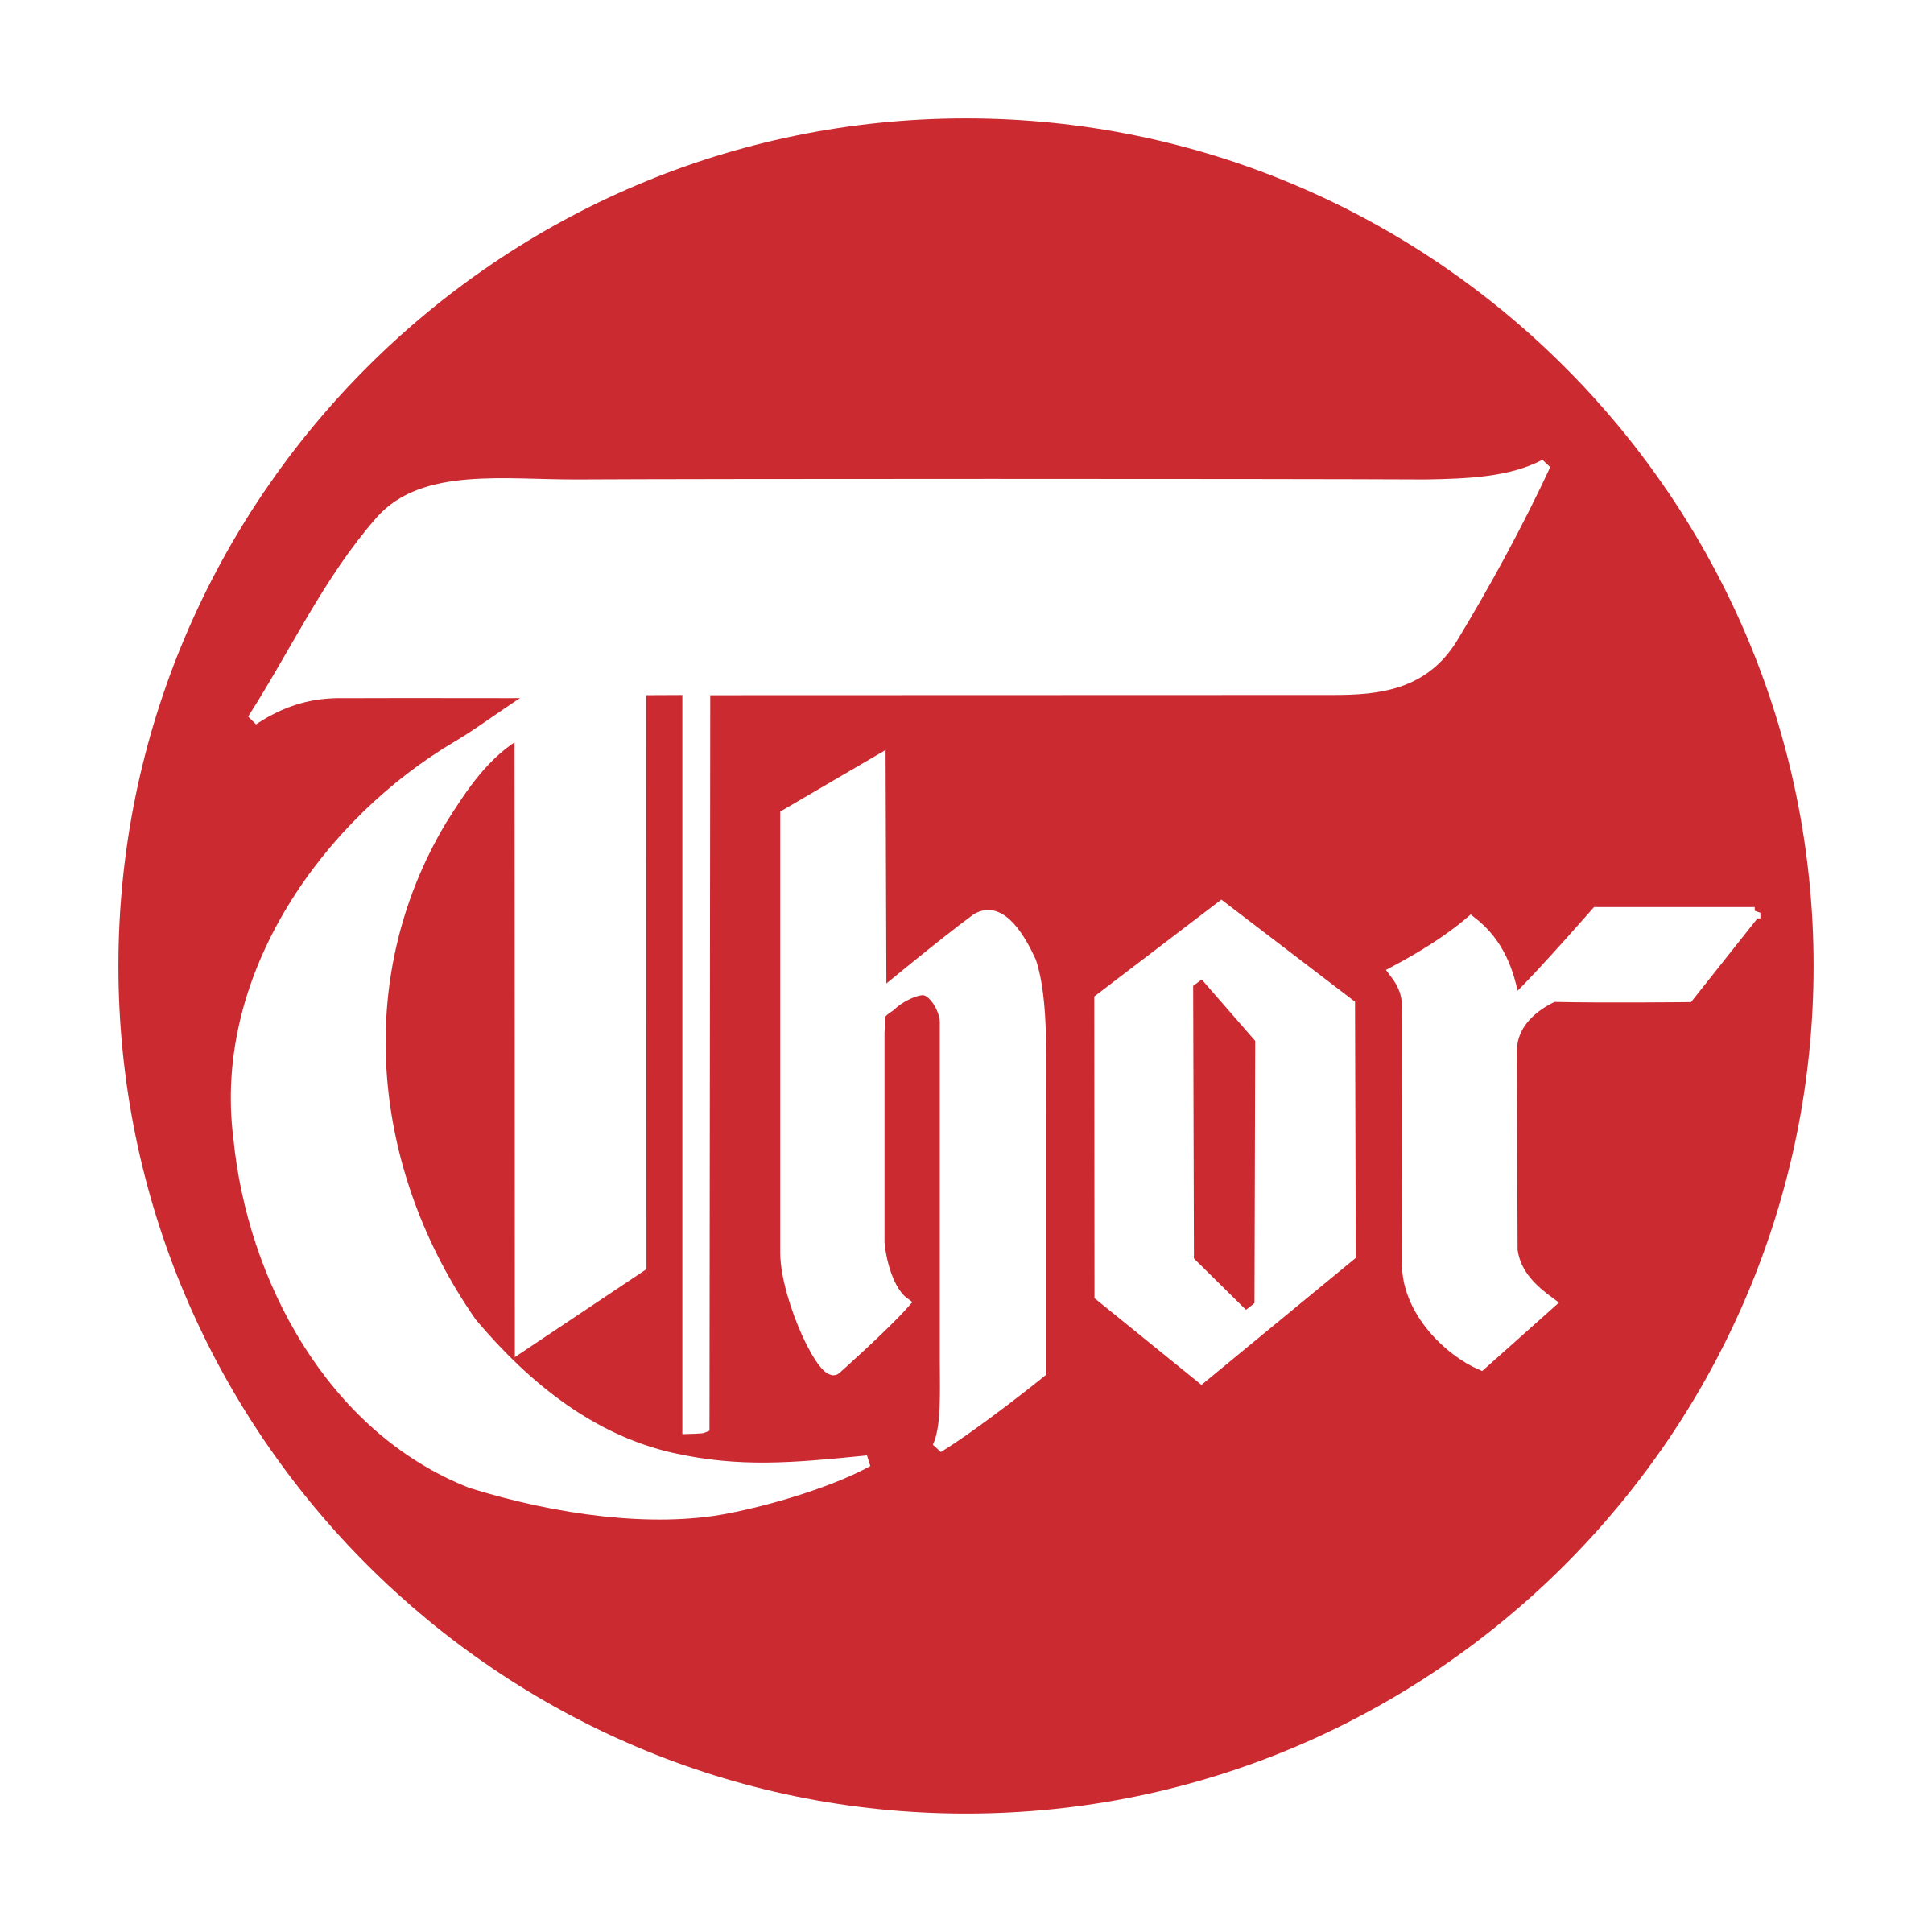 Thor Logo - Thor Logo PNG Transparent & SVG Vector - Freebie Supply